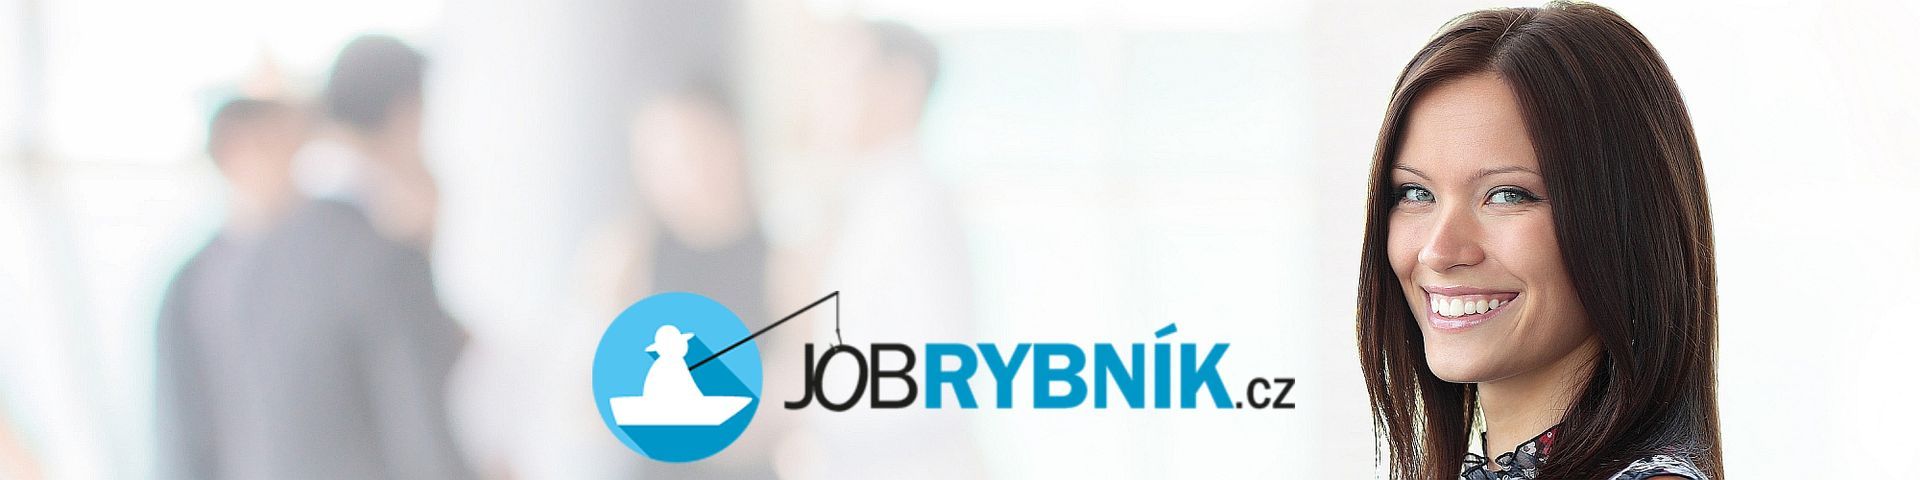 Logo_jobrybnik.cz Schriftzug mit Frau im Profil